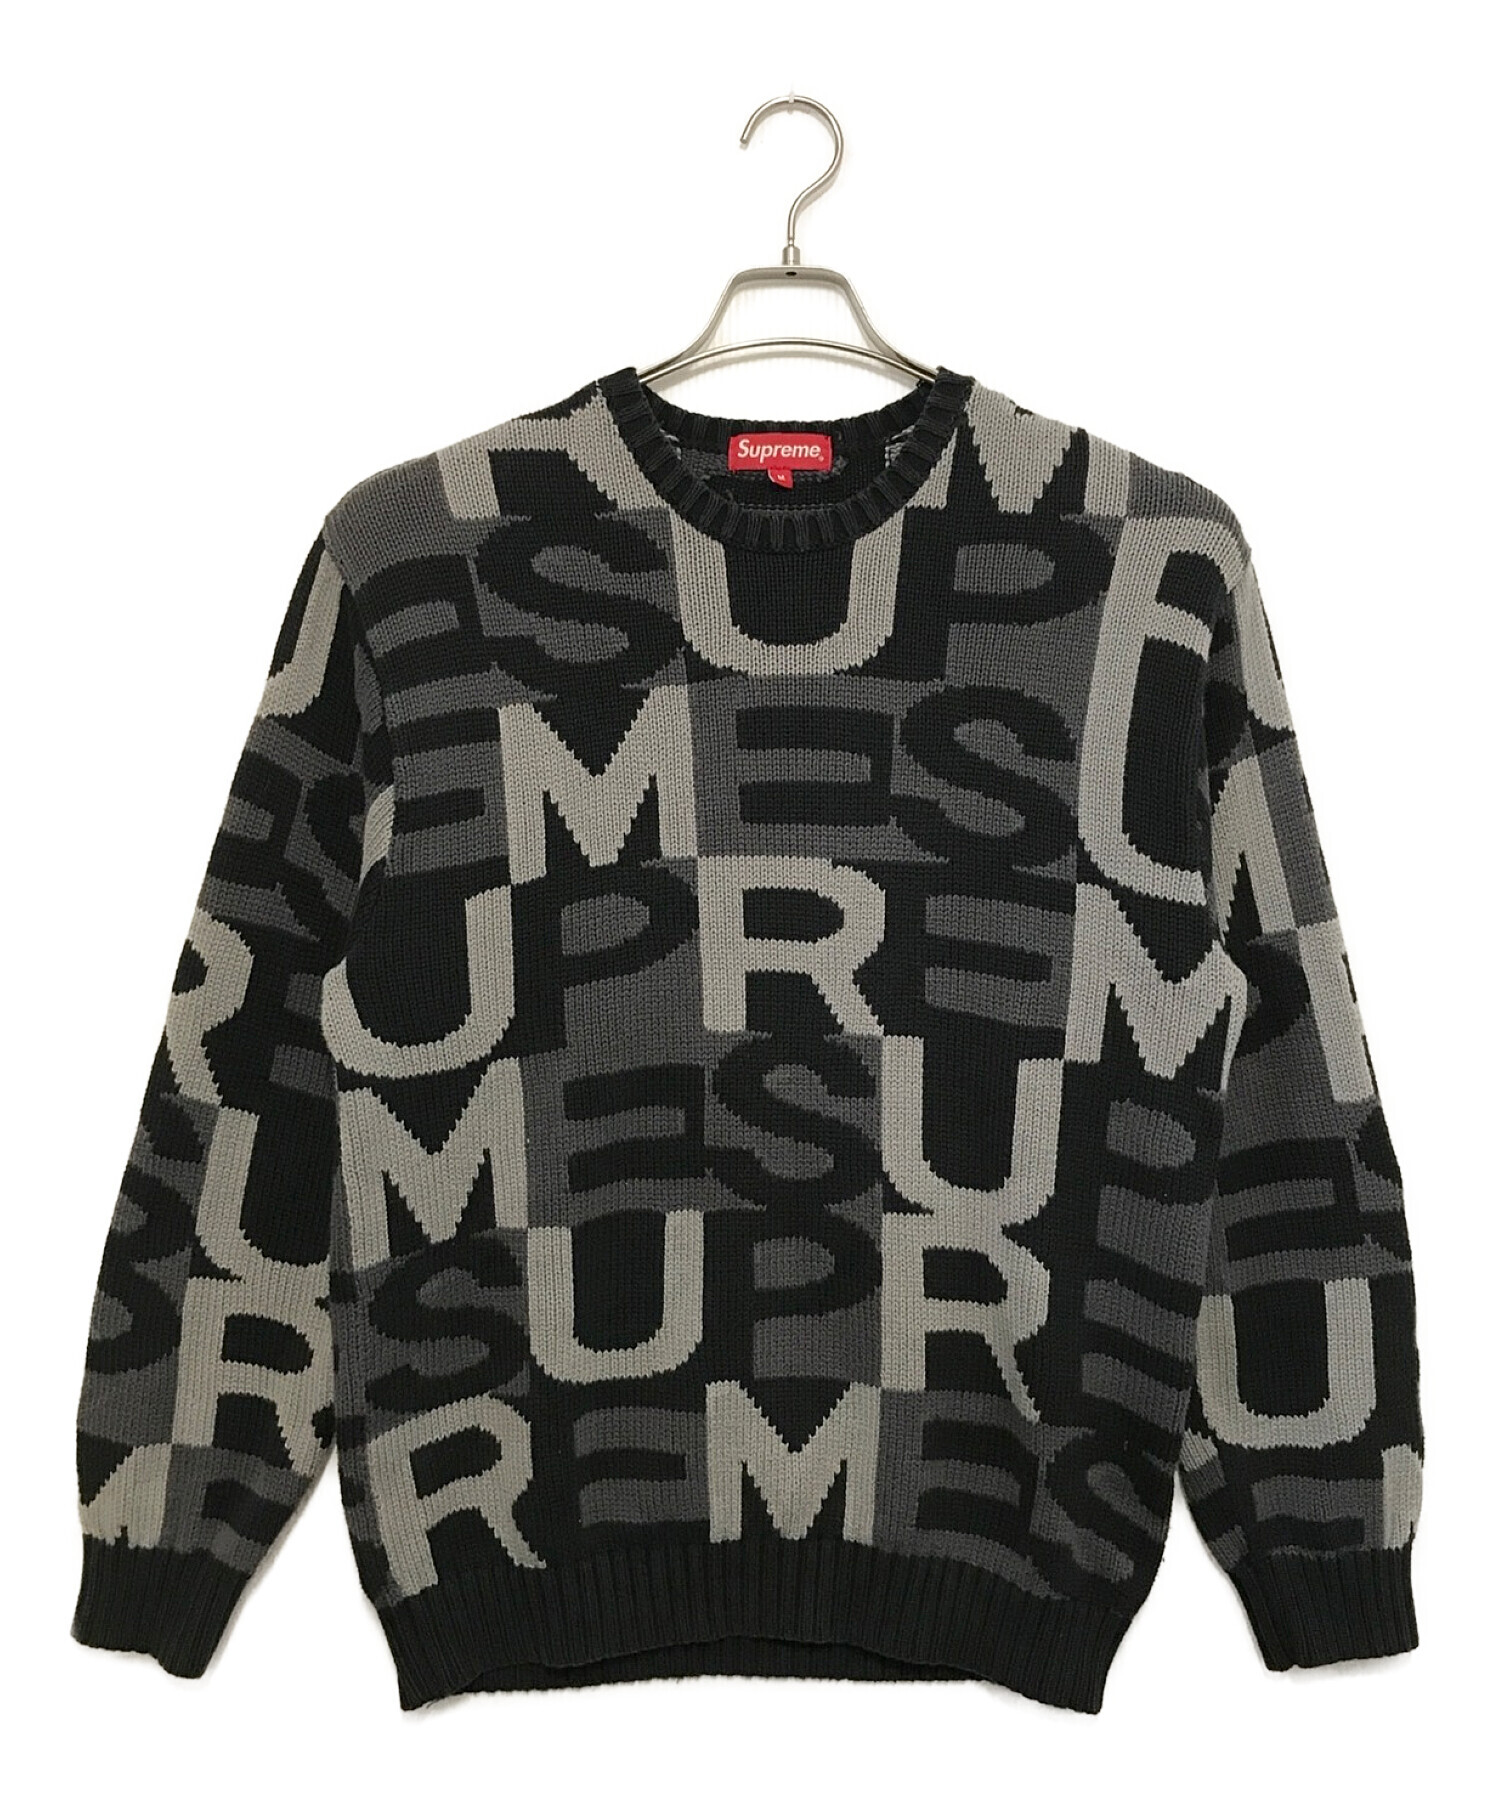 Supreme big letters sweater Mサイズ